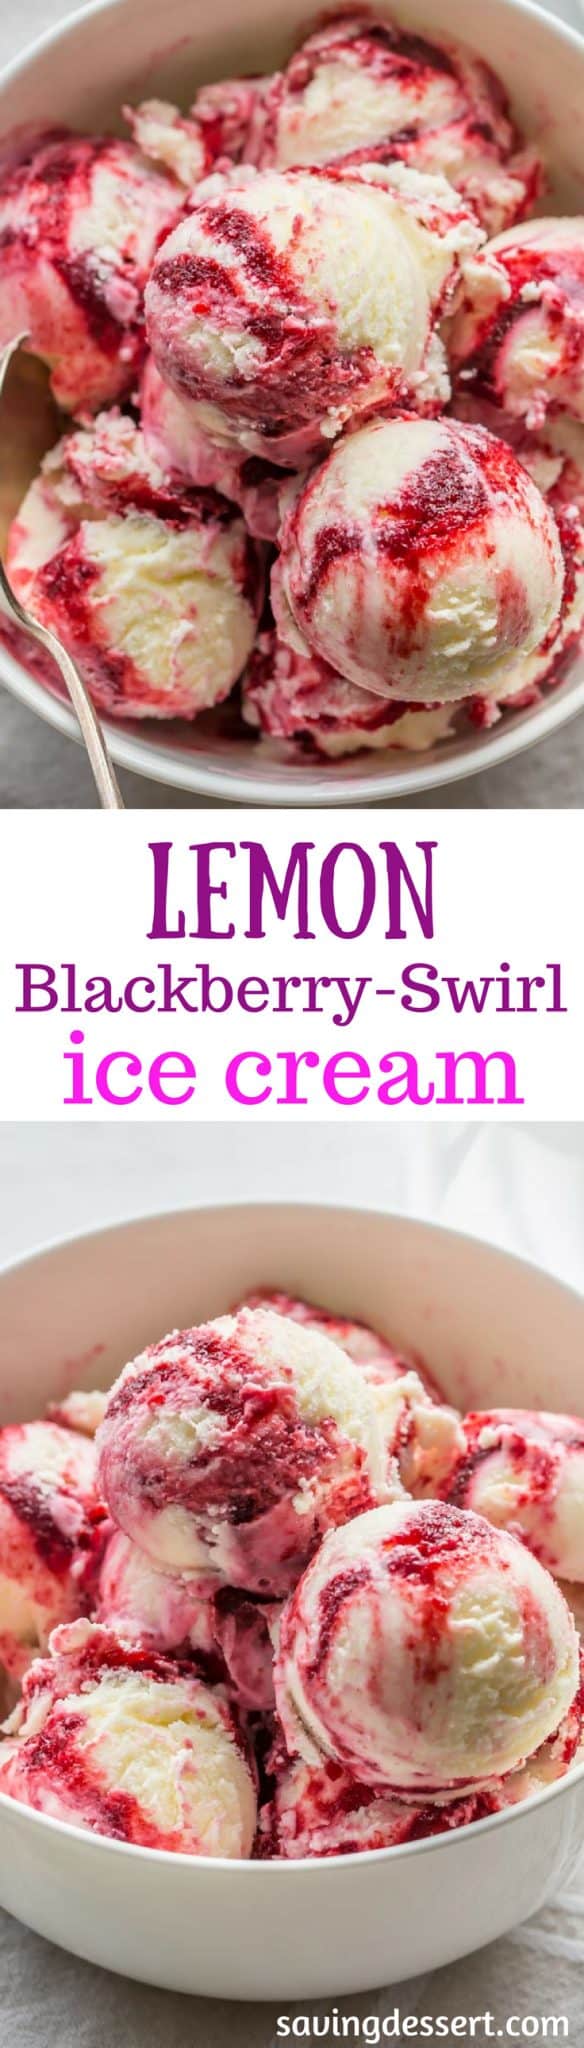 Lemon Ice Cream with a Blackberry Swirl ~ bright, tart lemon ice cream with a sweet blackberry swirl - this is a pretty terrific bowl of deliciousness!  www.savingdessert.com